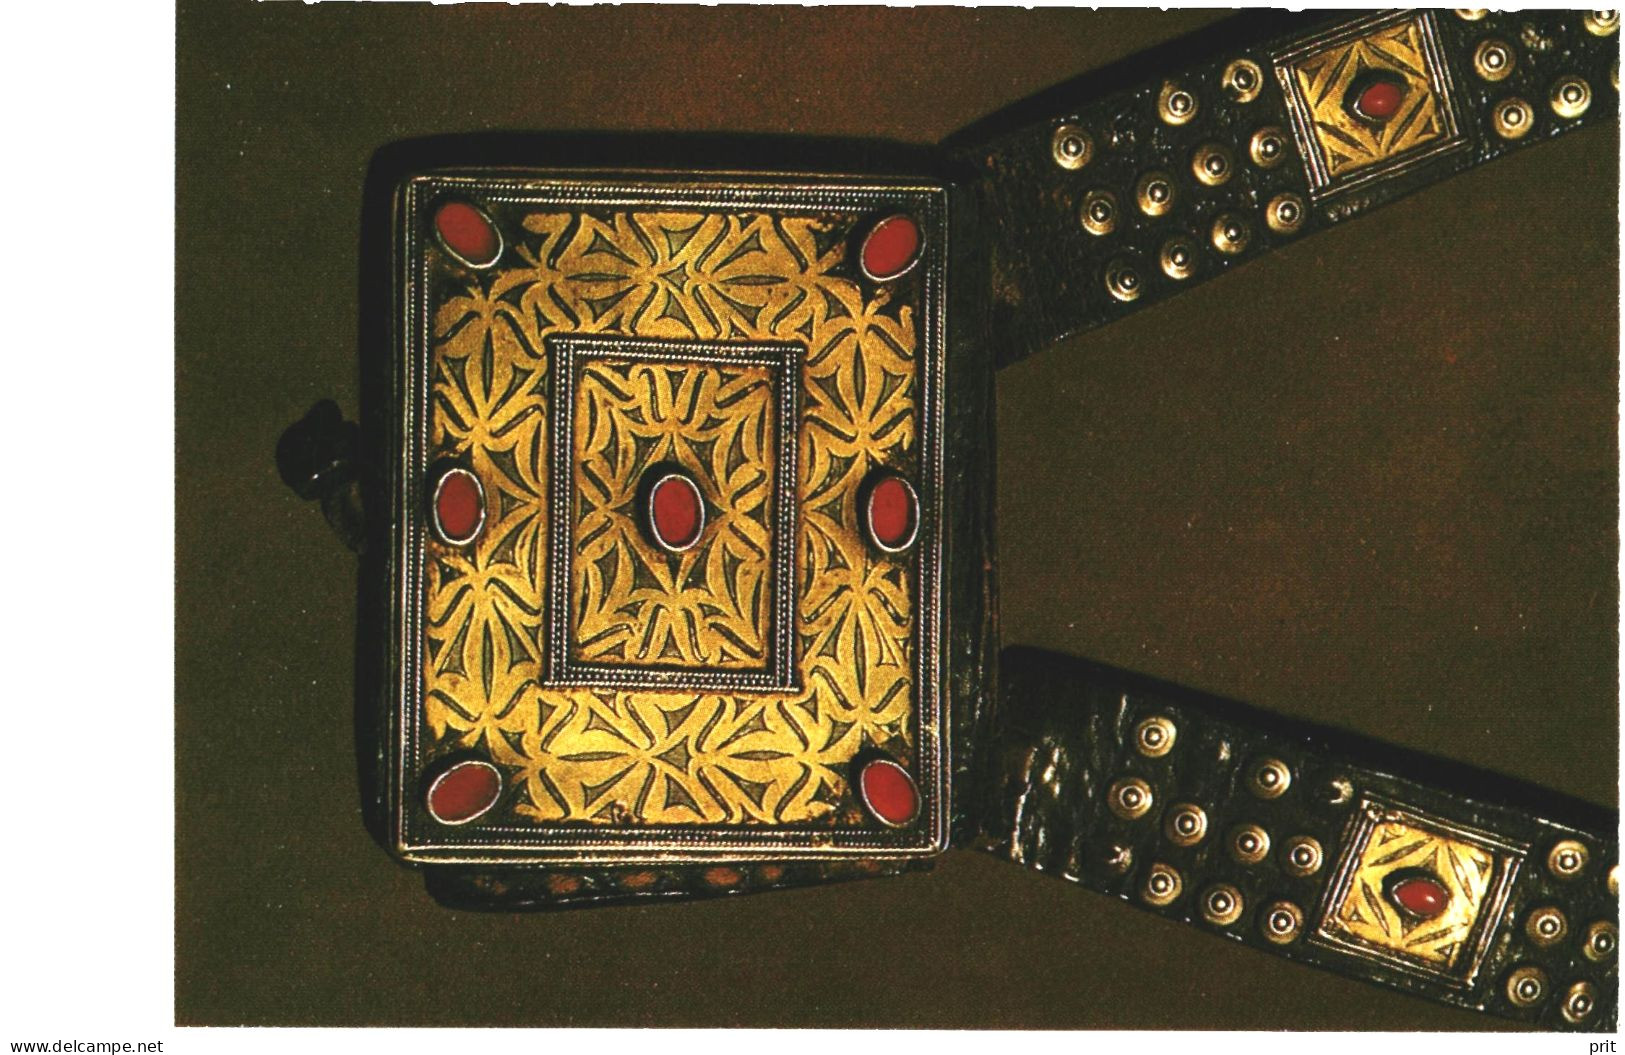 Turkmen Silverware antique jewelry Unused 16 Postcards Set, Soviet Turkmenistan USSR 1975 Publisher Aurora, Leningrad